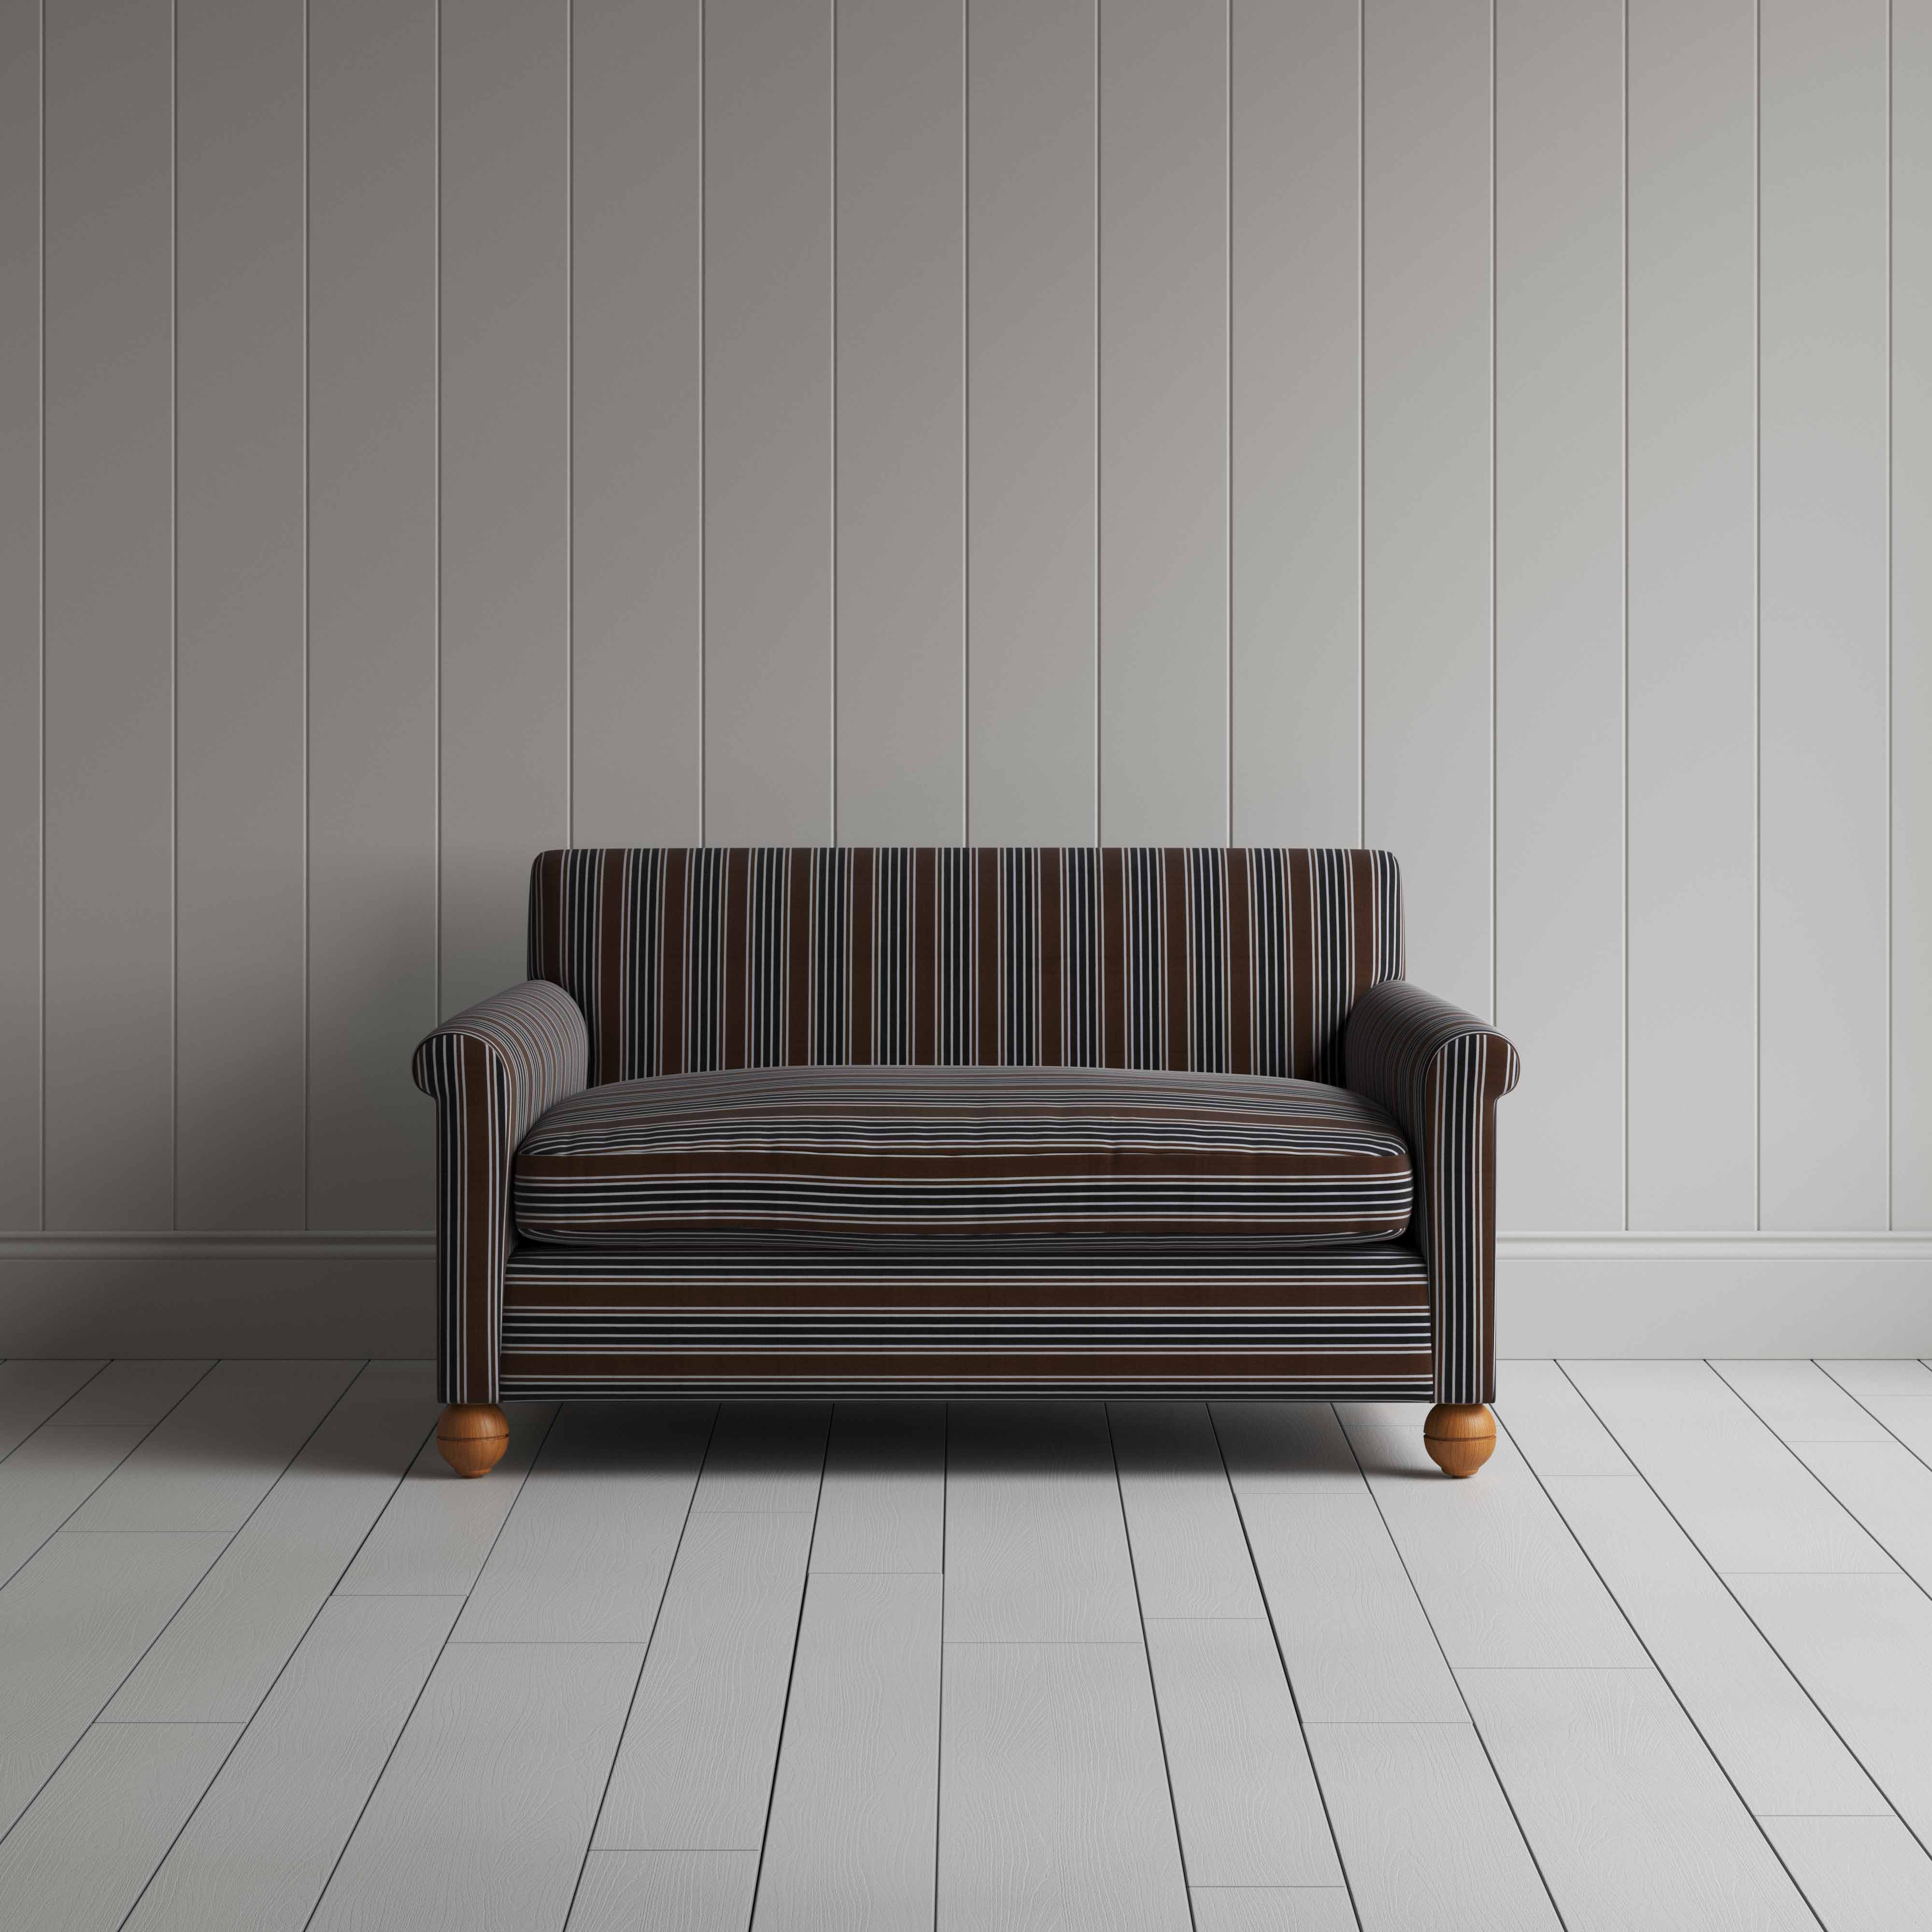  Idler 2 Seater Sofa in Regatta Cotton, Charcoal 